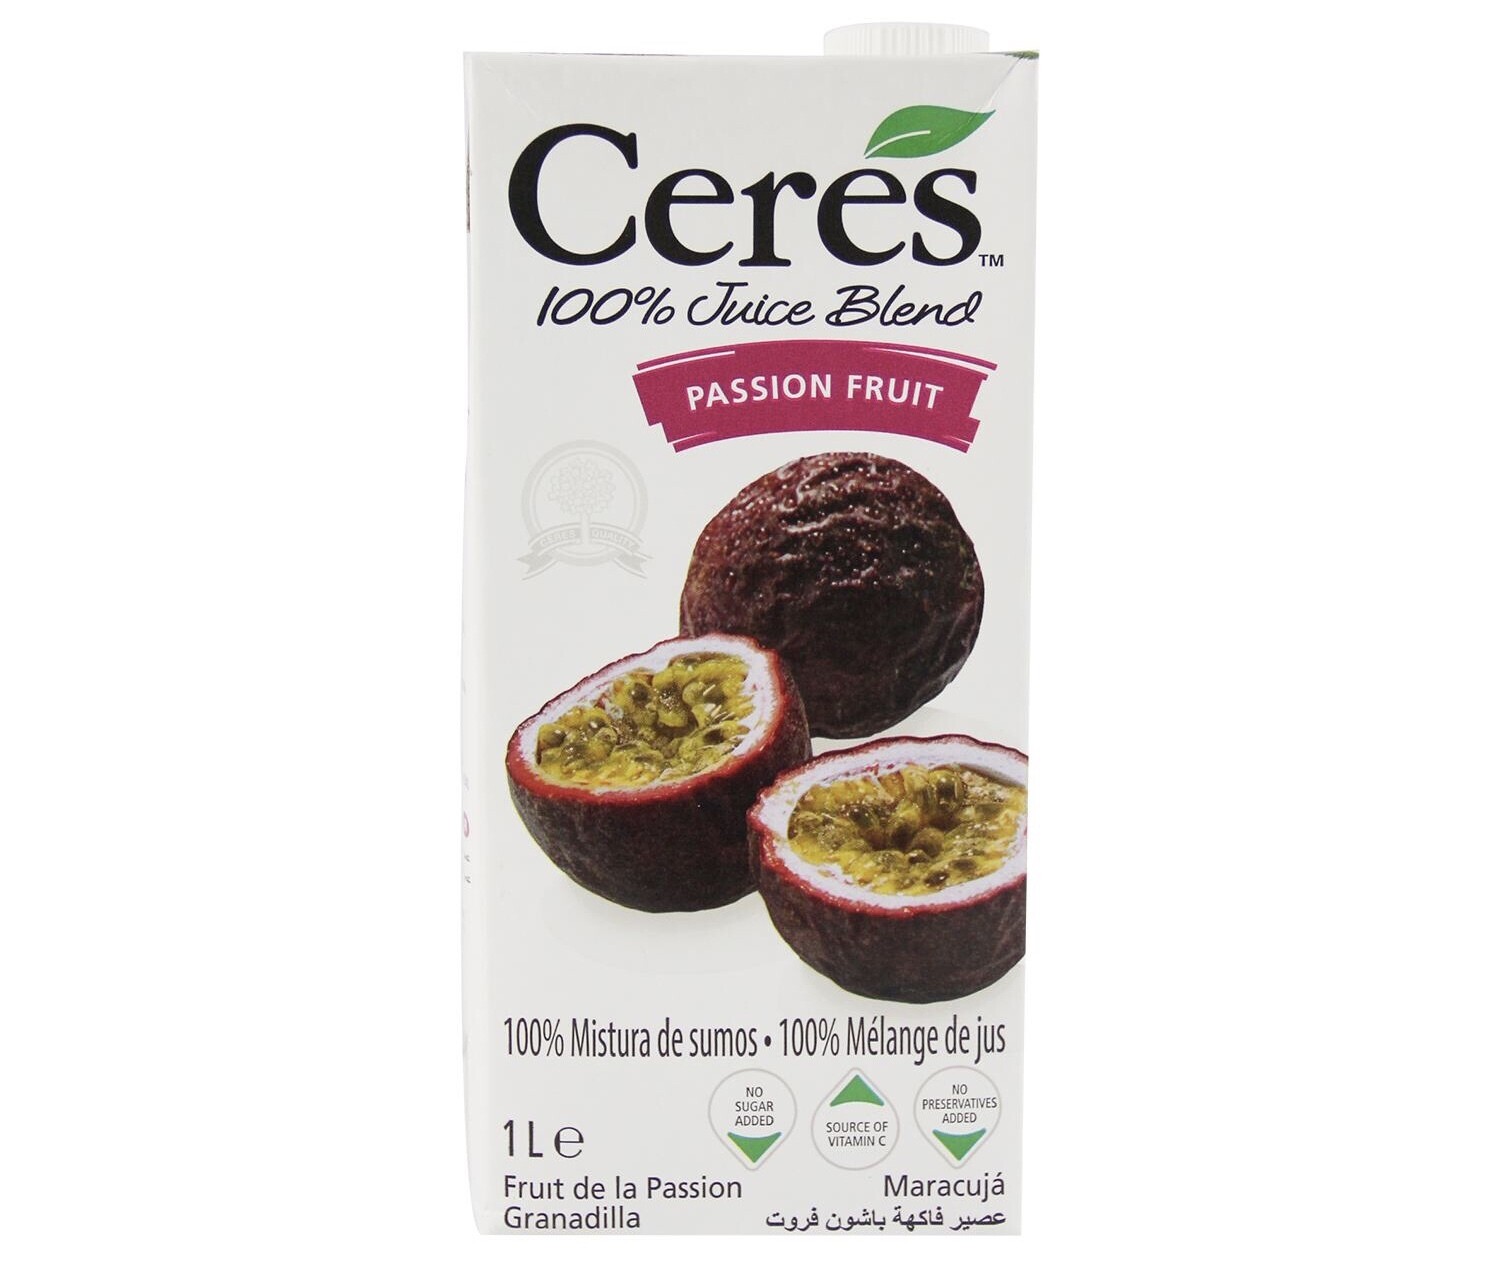 Grocery / Juice / Ceres Passion Fruit Juice